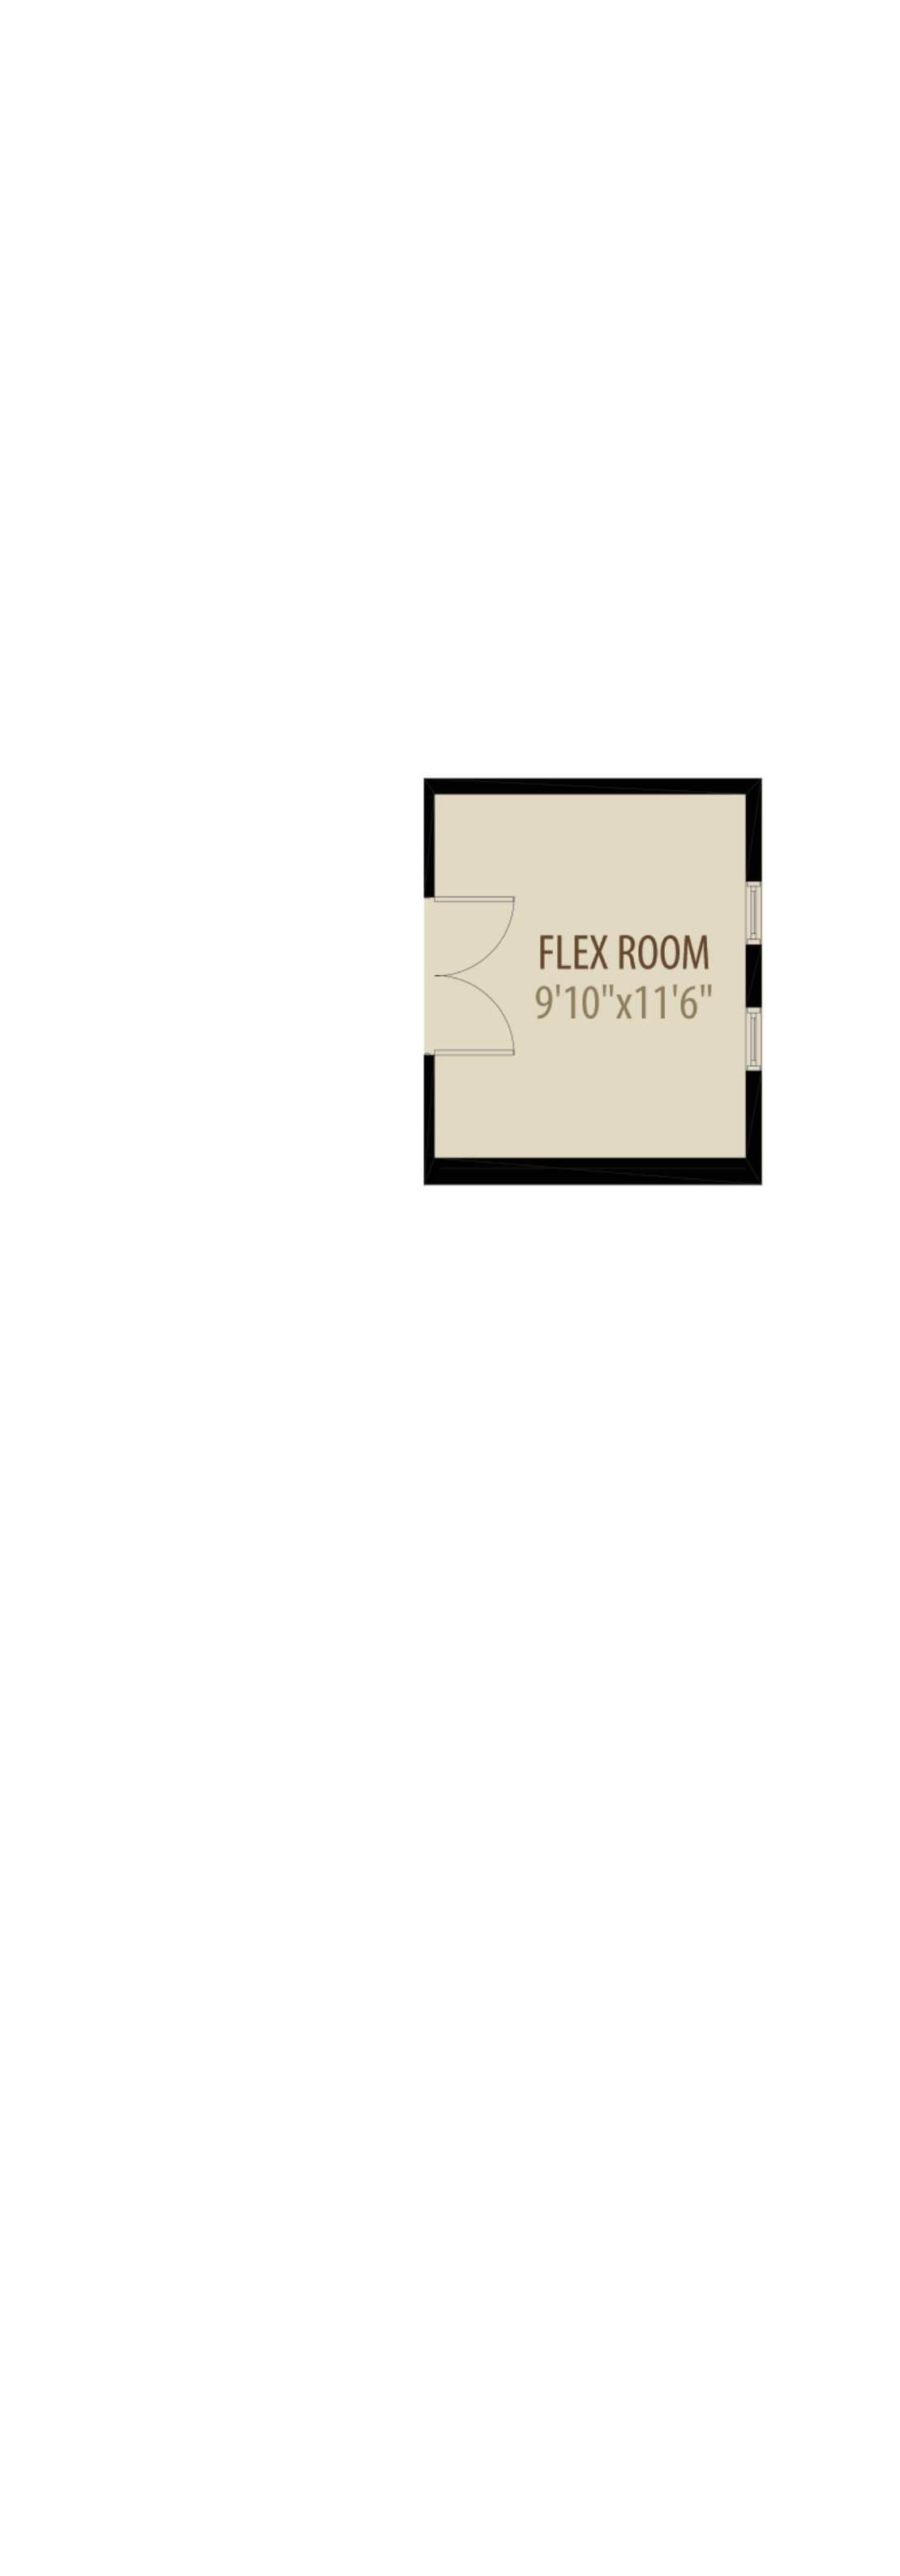 Enclosed Flex Room